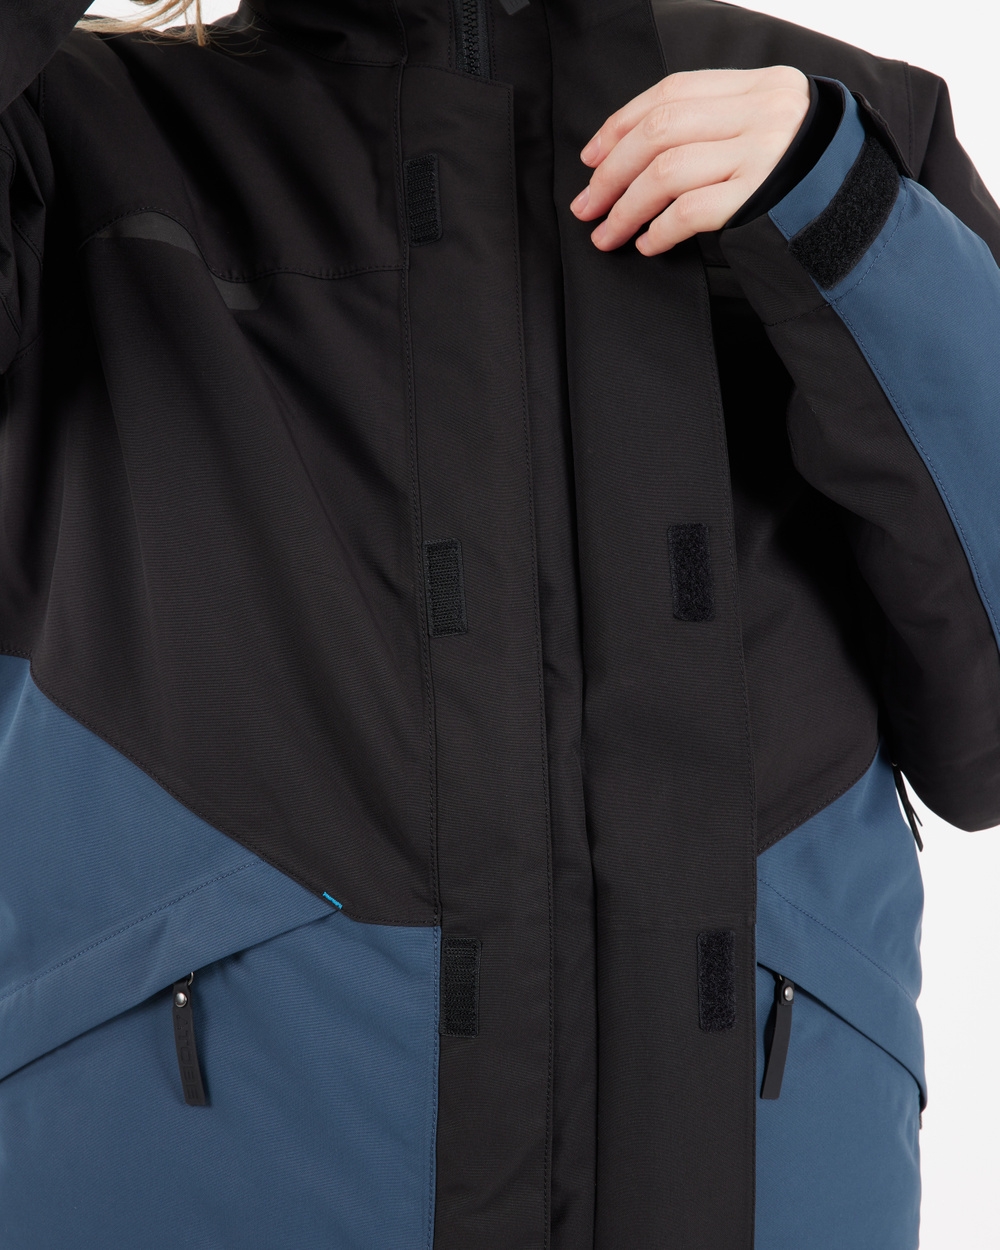 Hoback Jacket Insulated - Blue Dream